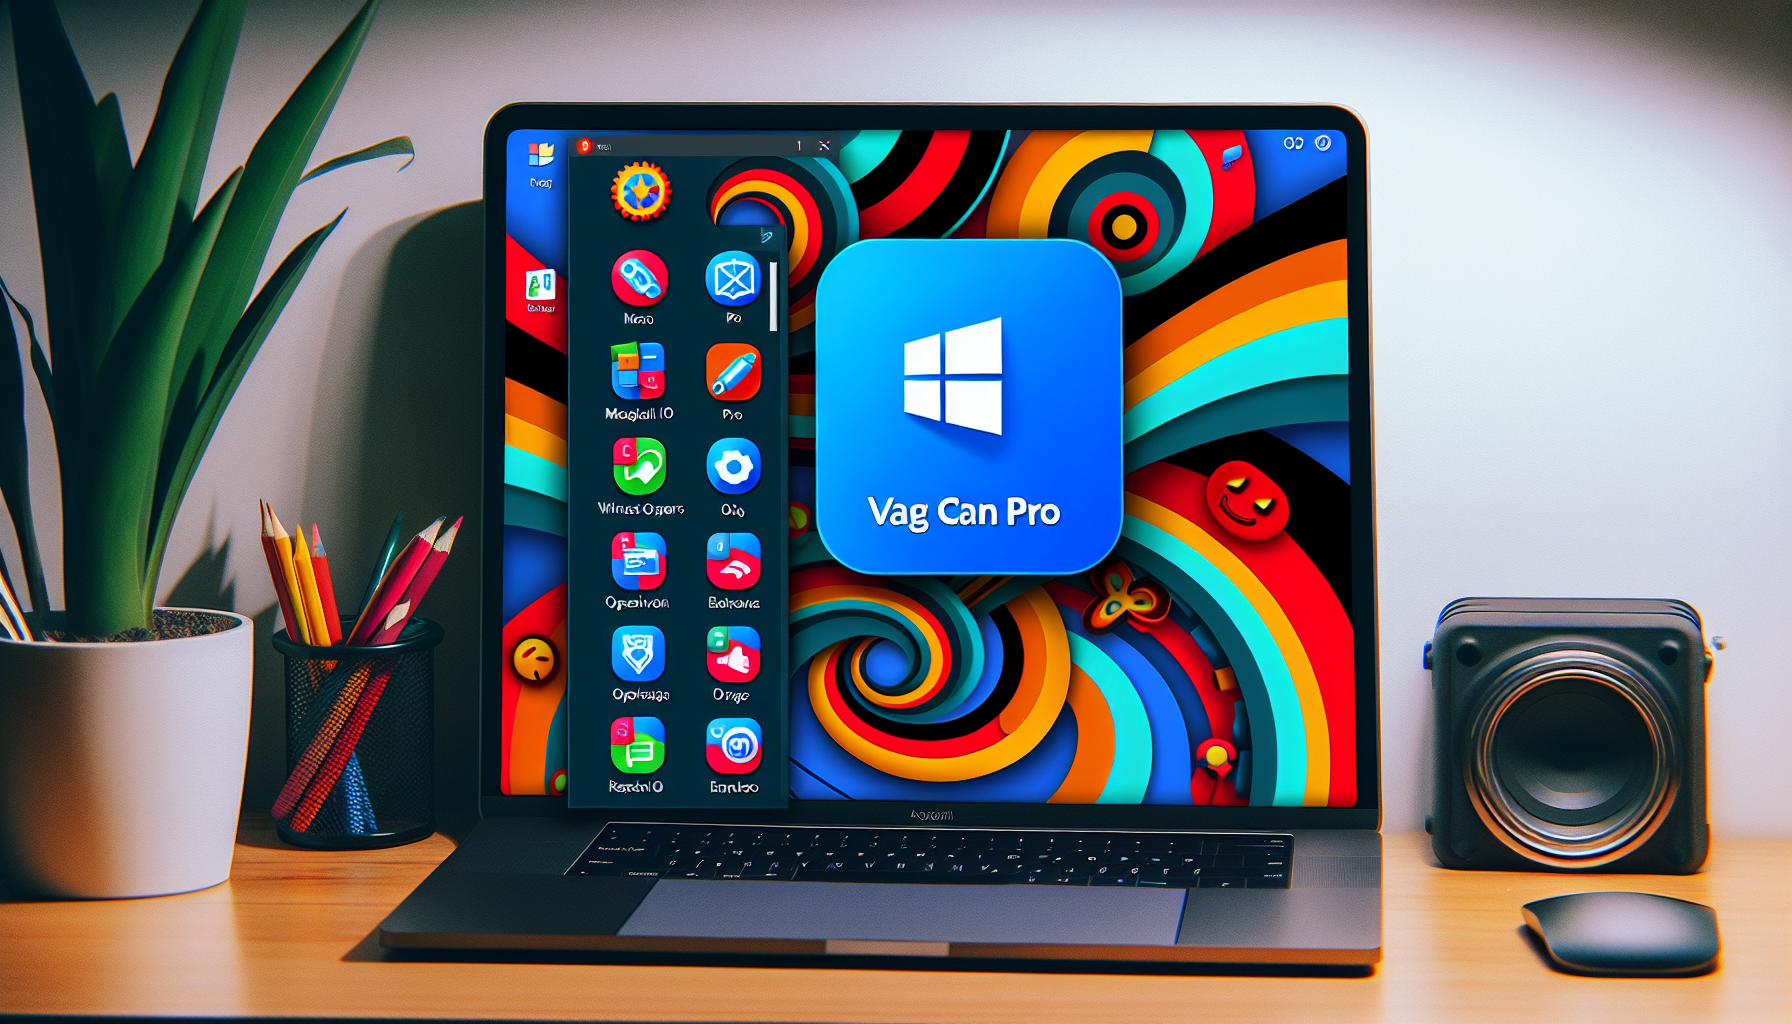 Vag Can Pro on fresh Windows